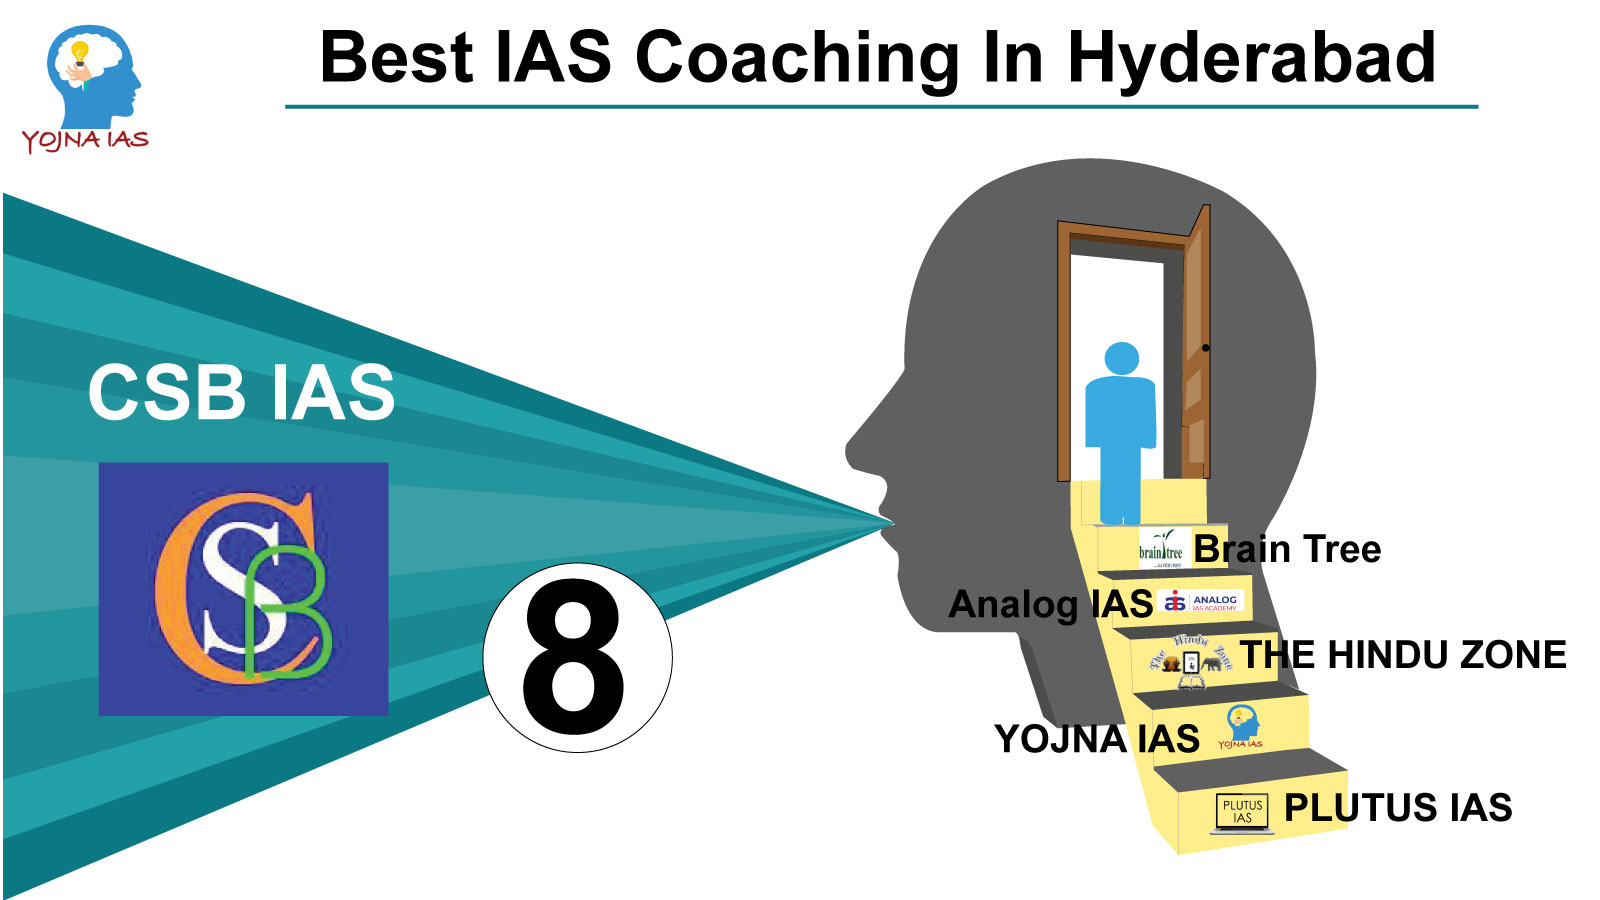 top ias coaching in hyderabad